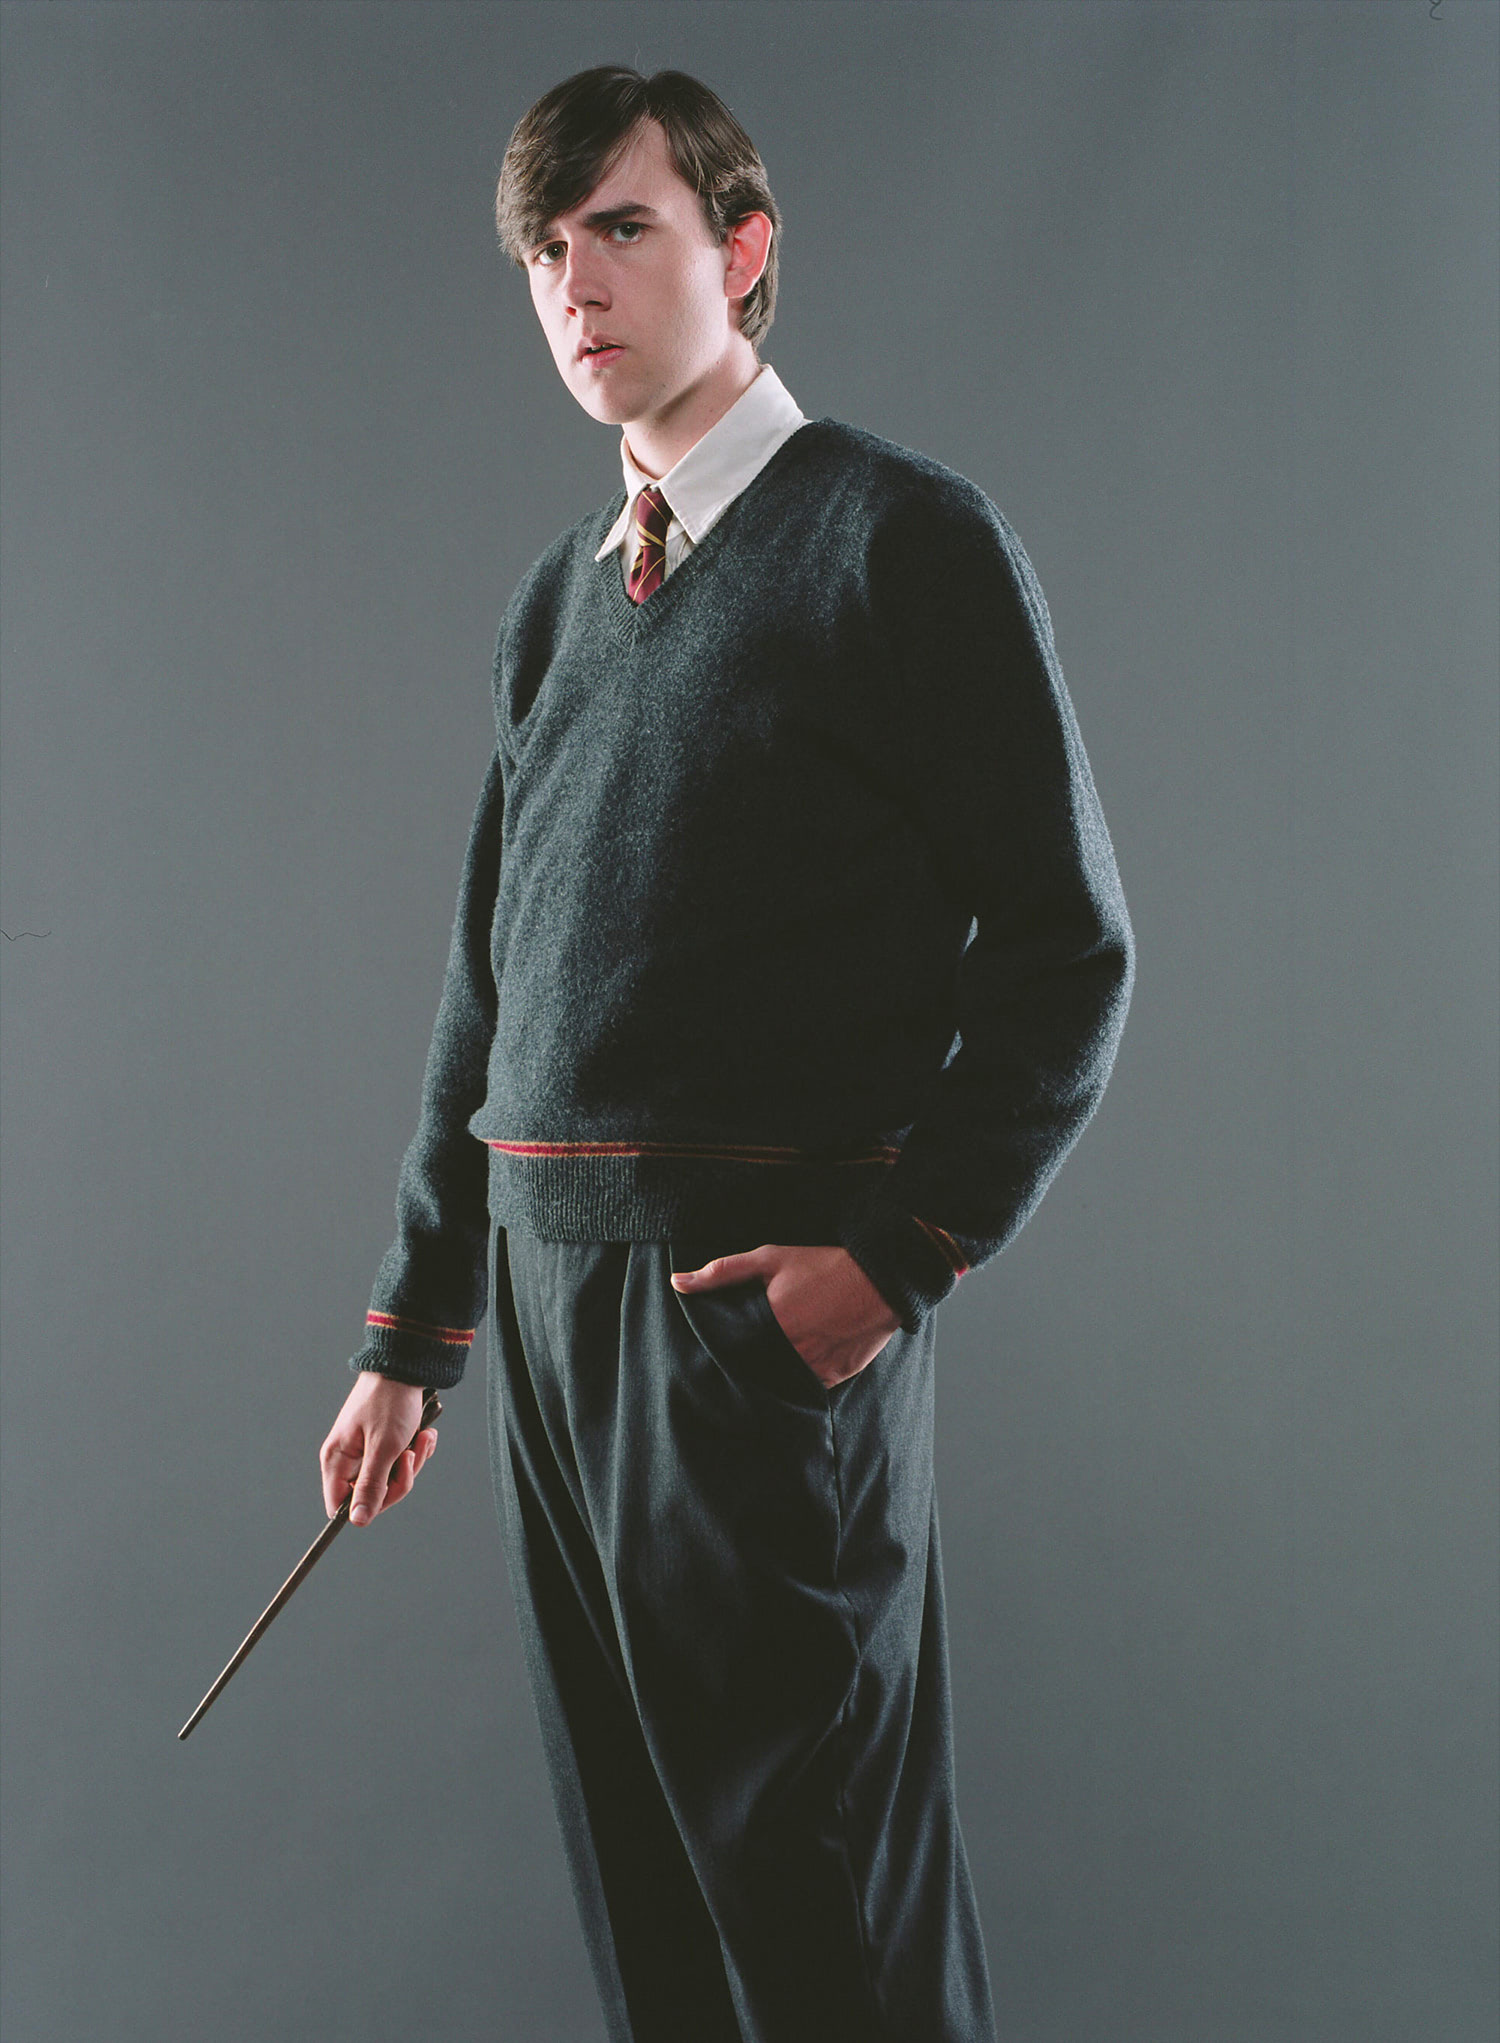 Portrait of Neville Longbottom